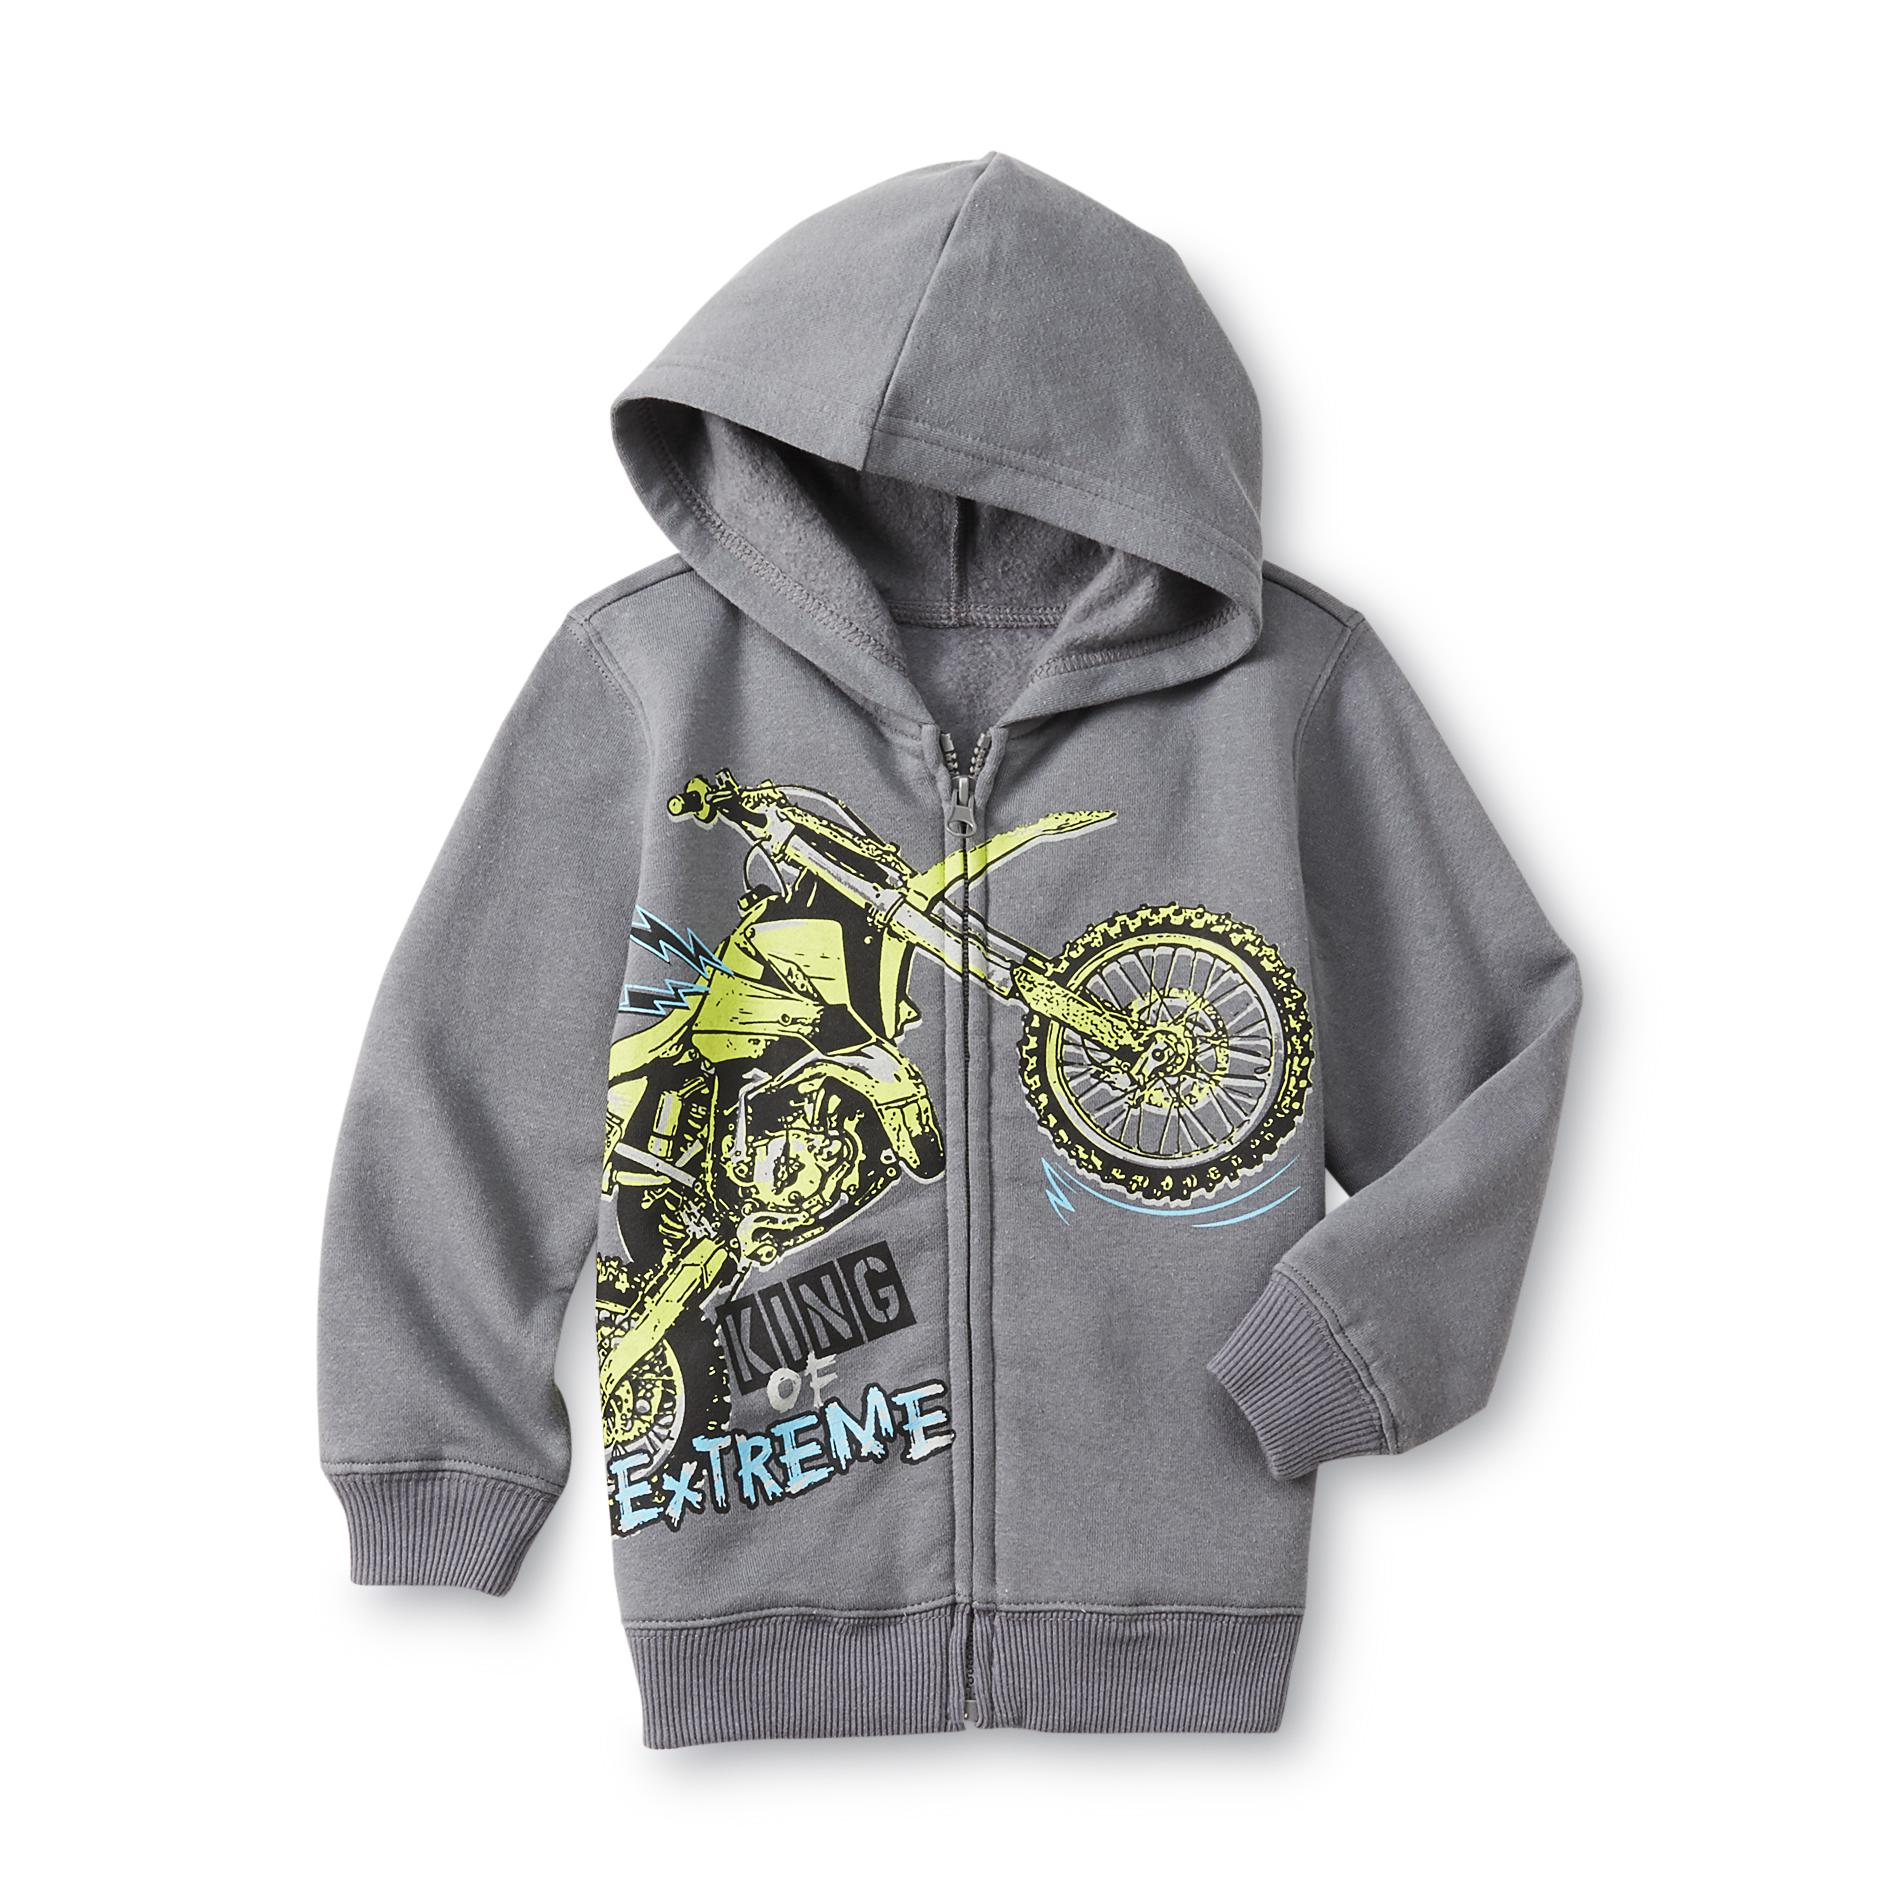 WonderKids Infant & Toddler Boy's Graphic Hoodie Jacket - Dirt Bike